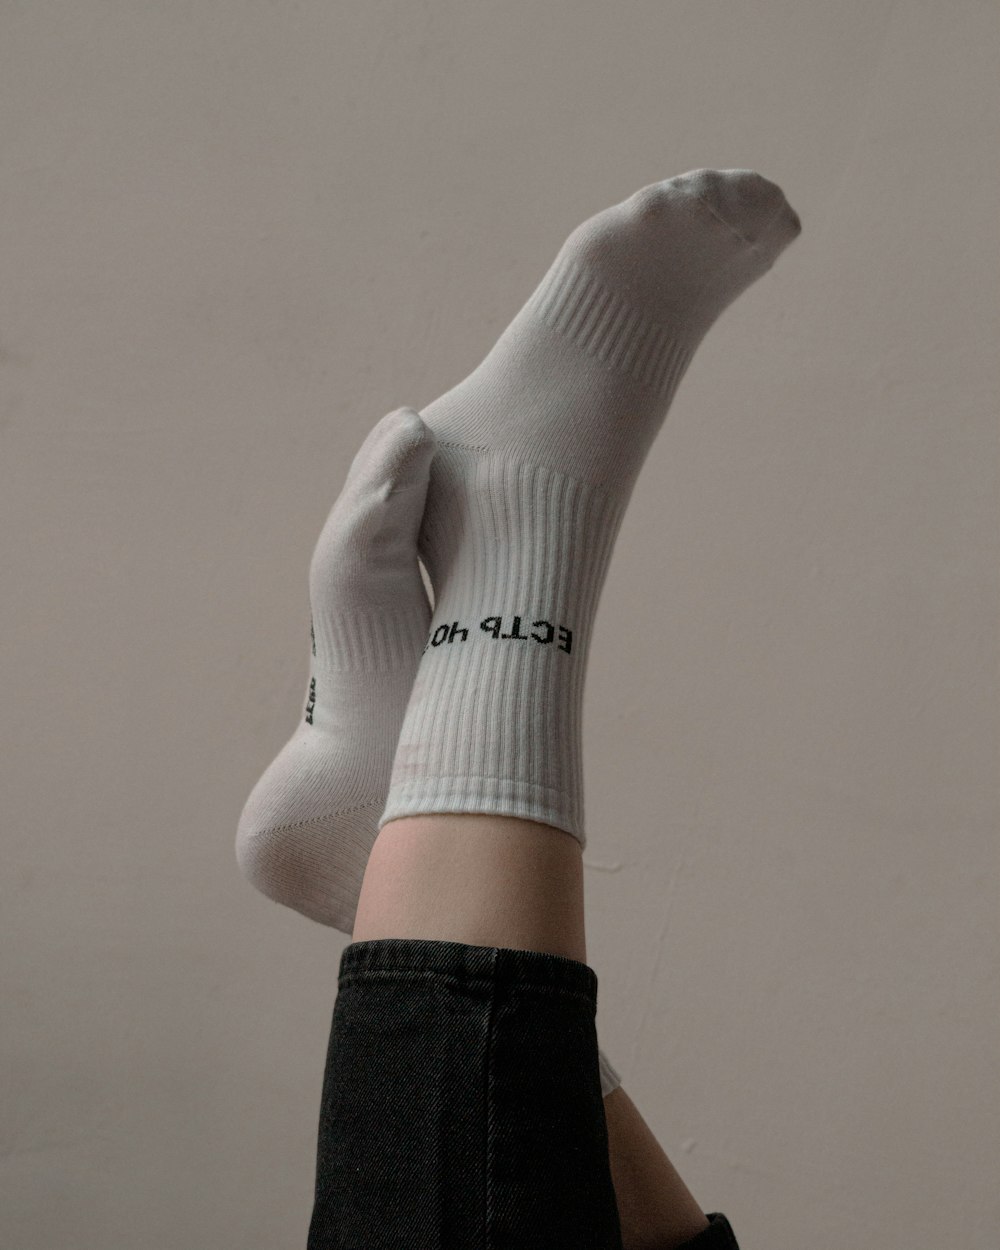 person wearing white nike sock